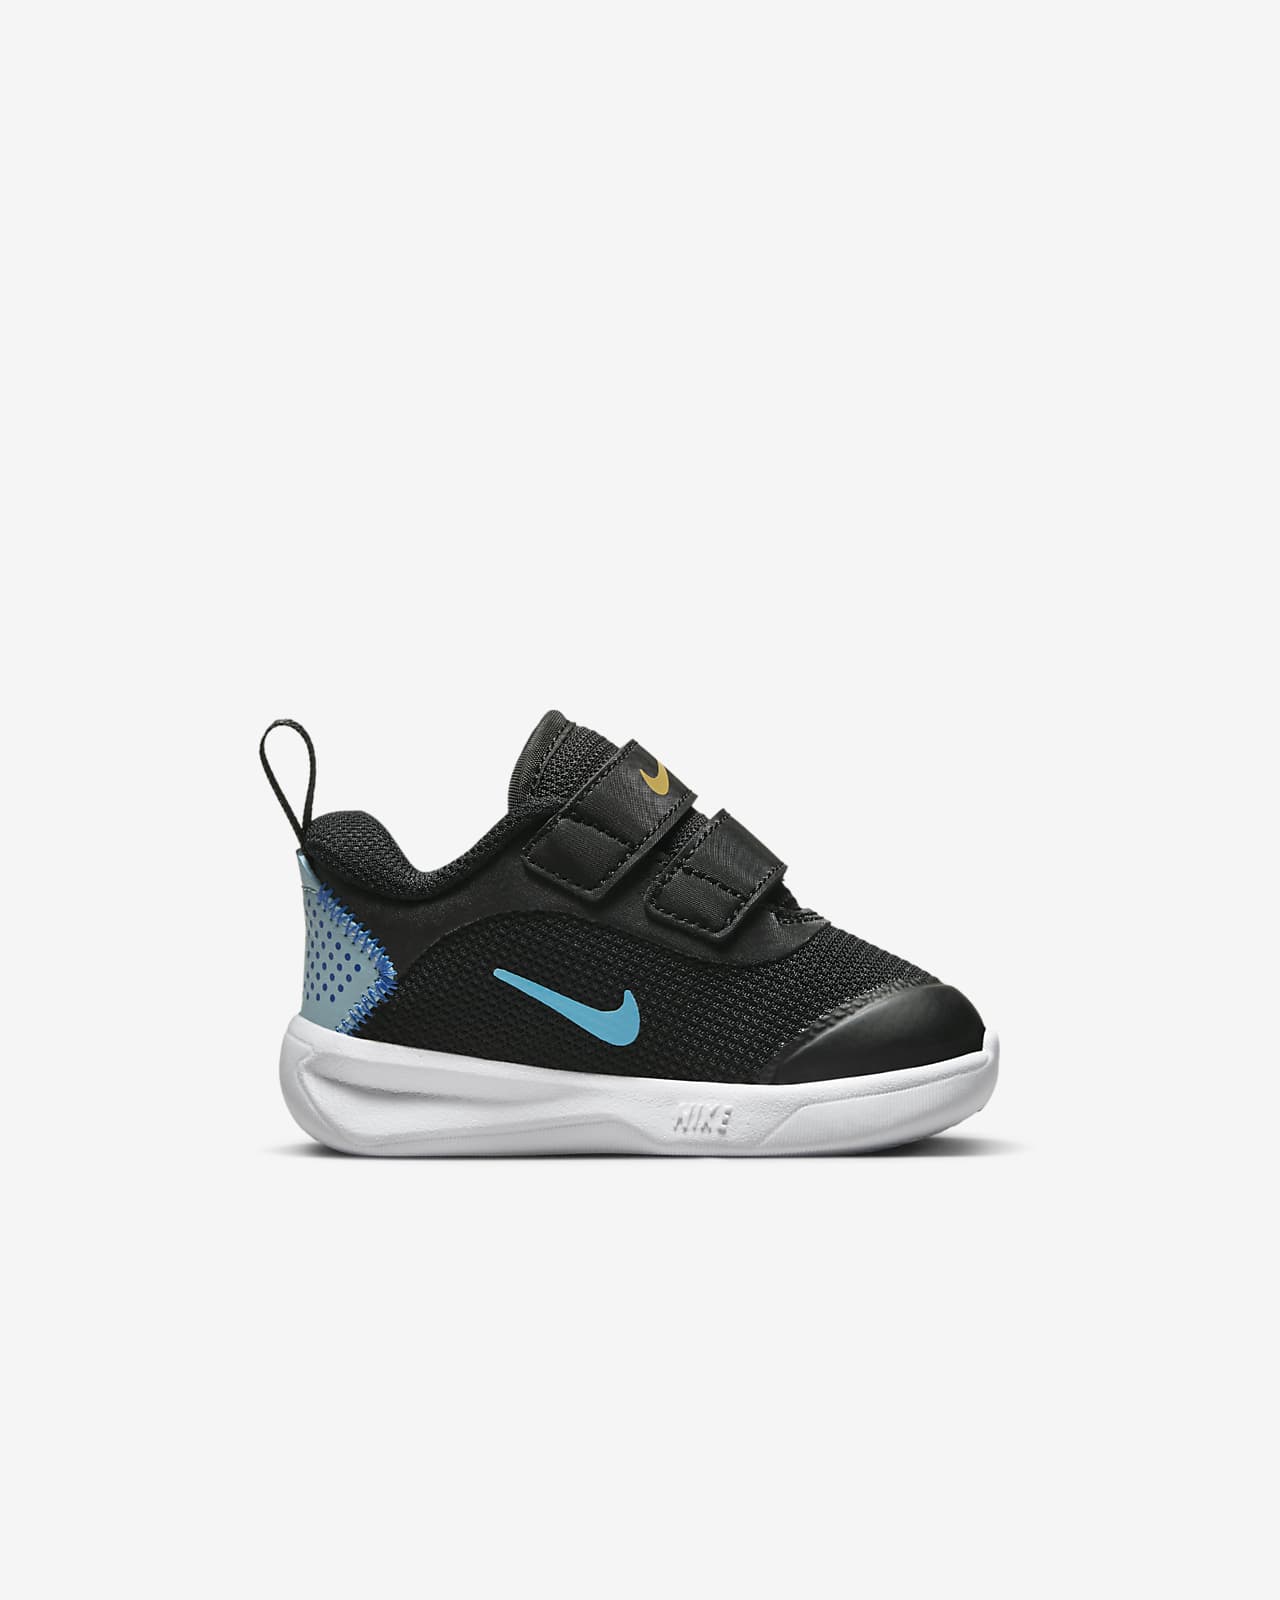 Nike Omni Multi-Court Nike ID Shoes. Baby/Toddler